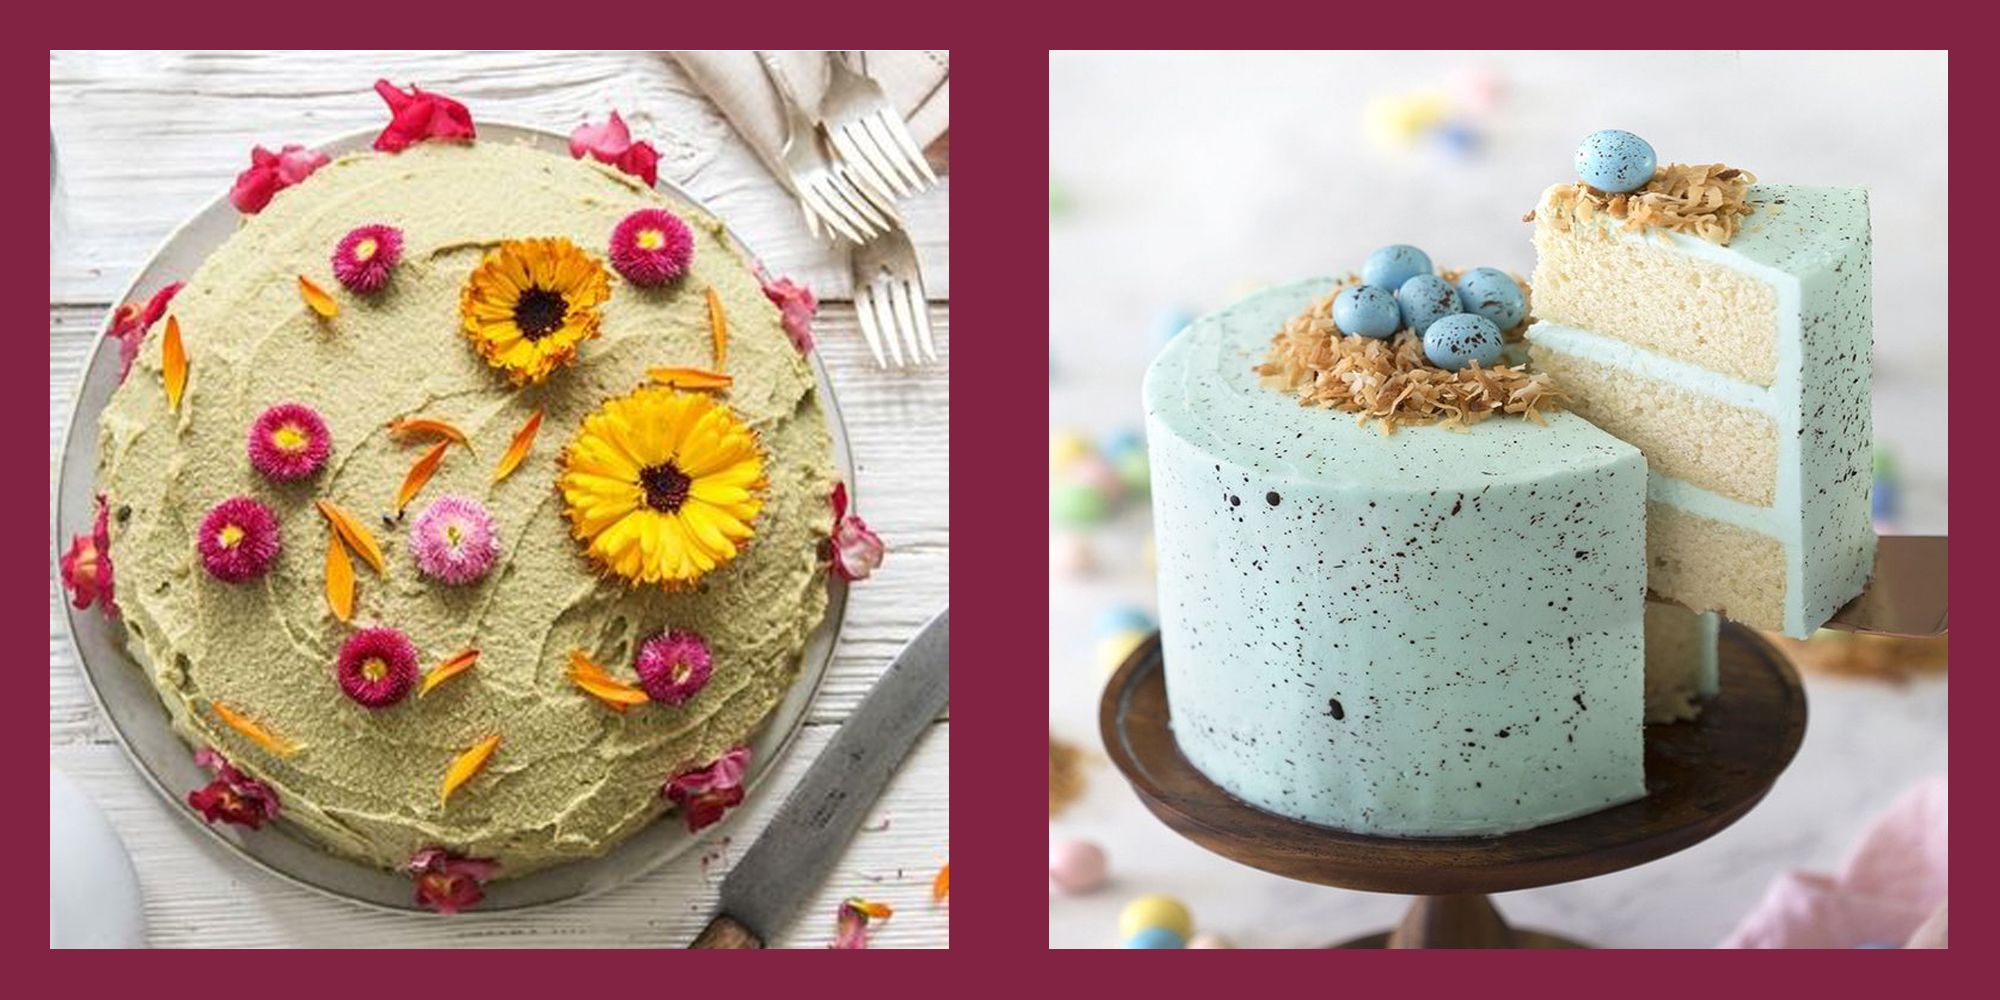 Cake decorating ideas | BBC Good Food